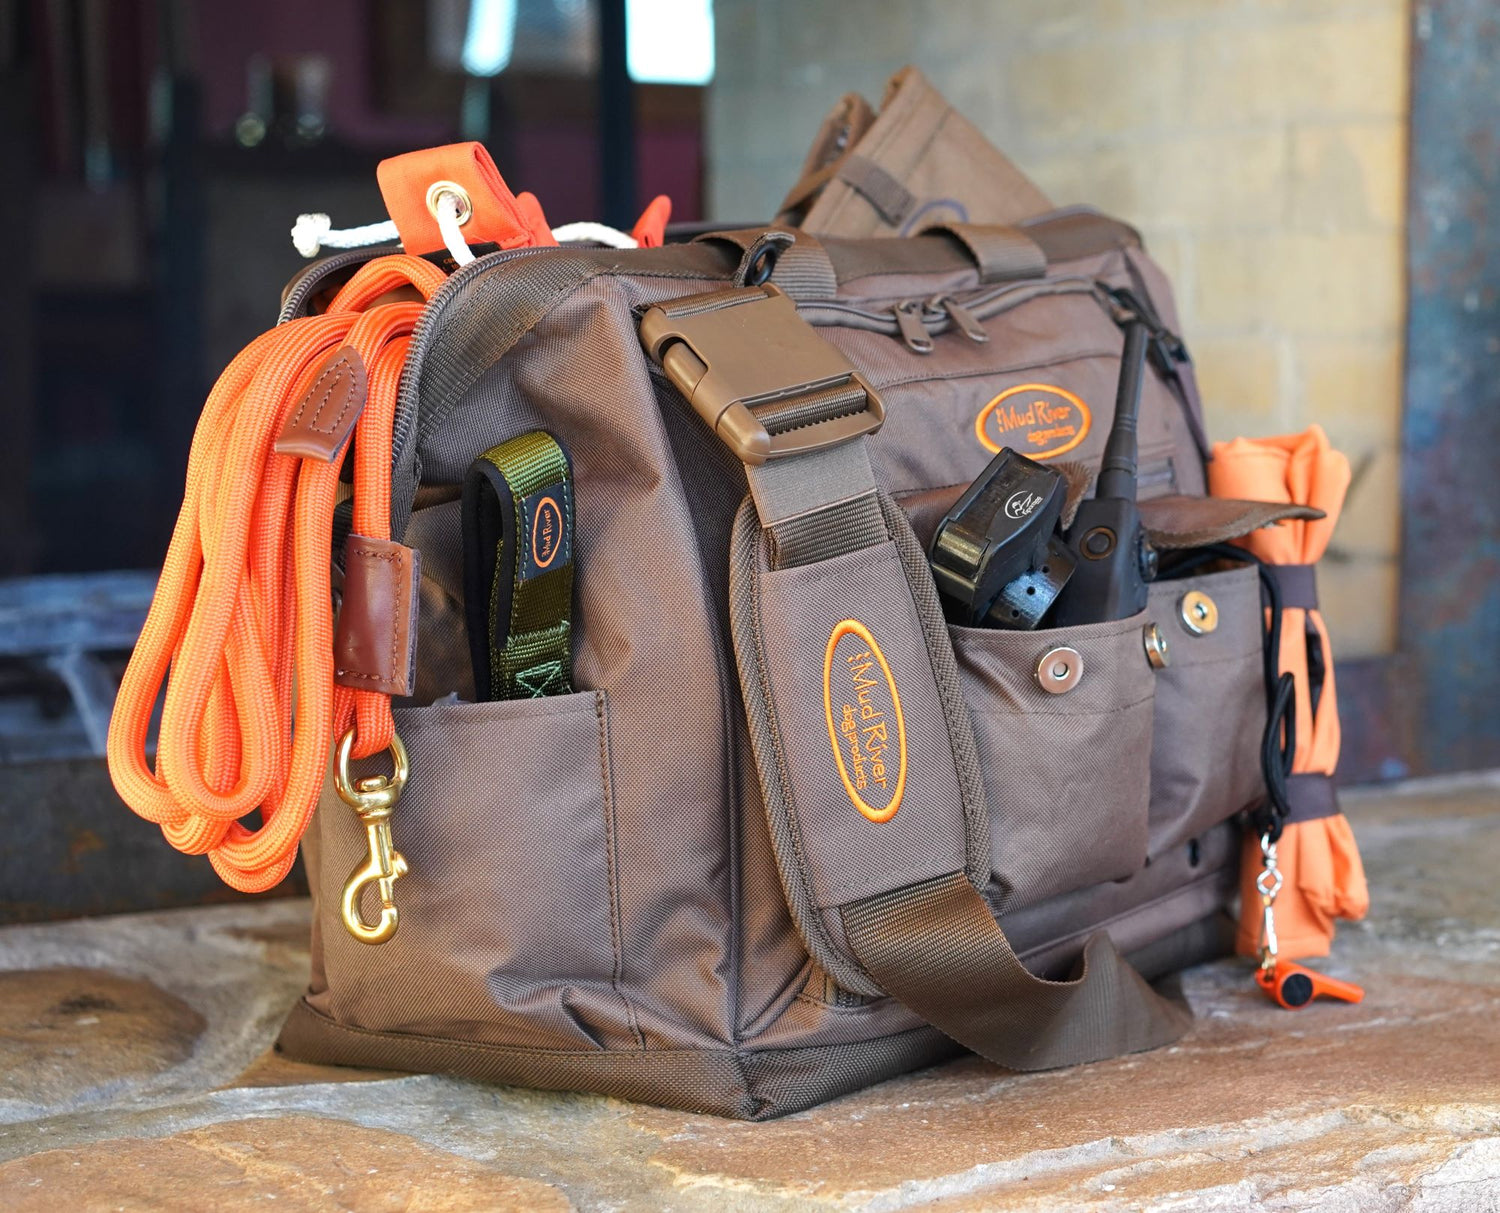 Dog Handler & Gear Bags